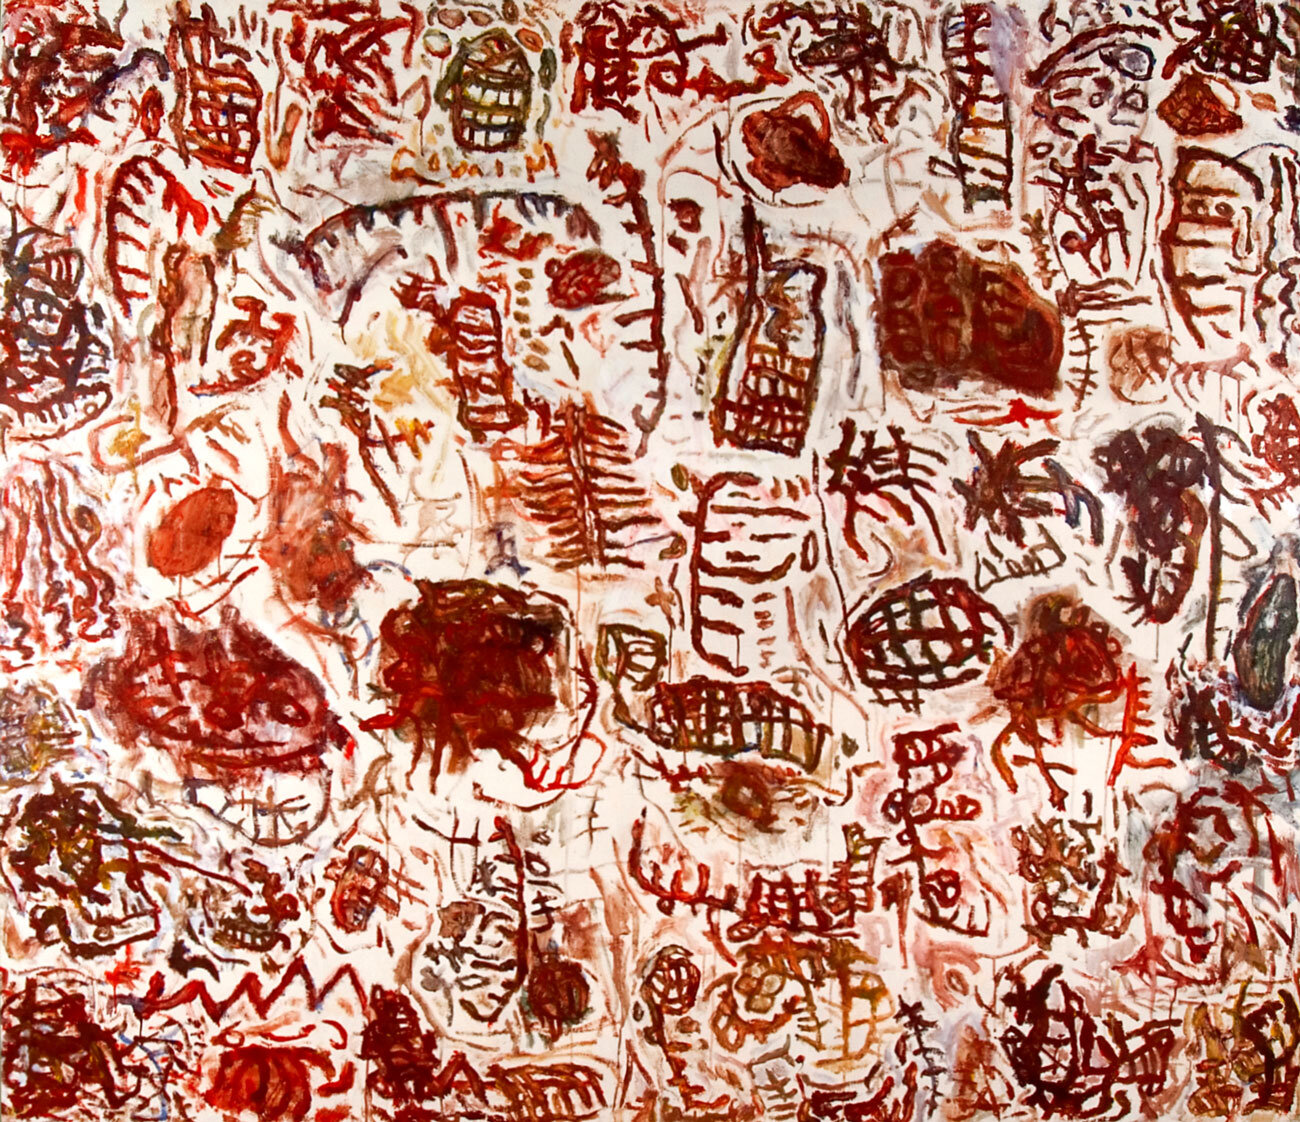   Inside the Body , 1985, acrylic, cast gesso and gauze on canvas, 6 x 7 feet 